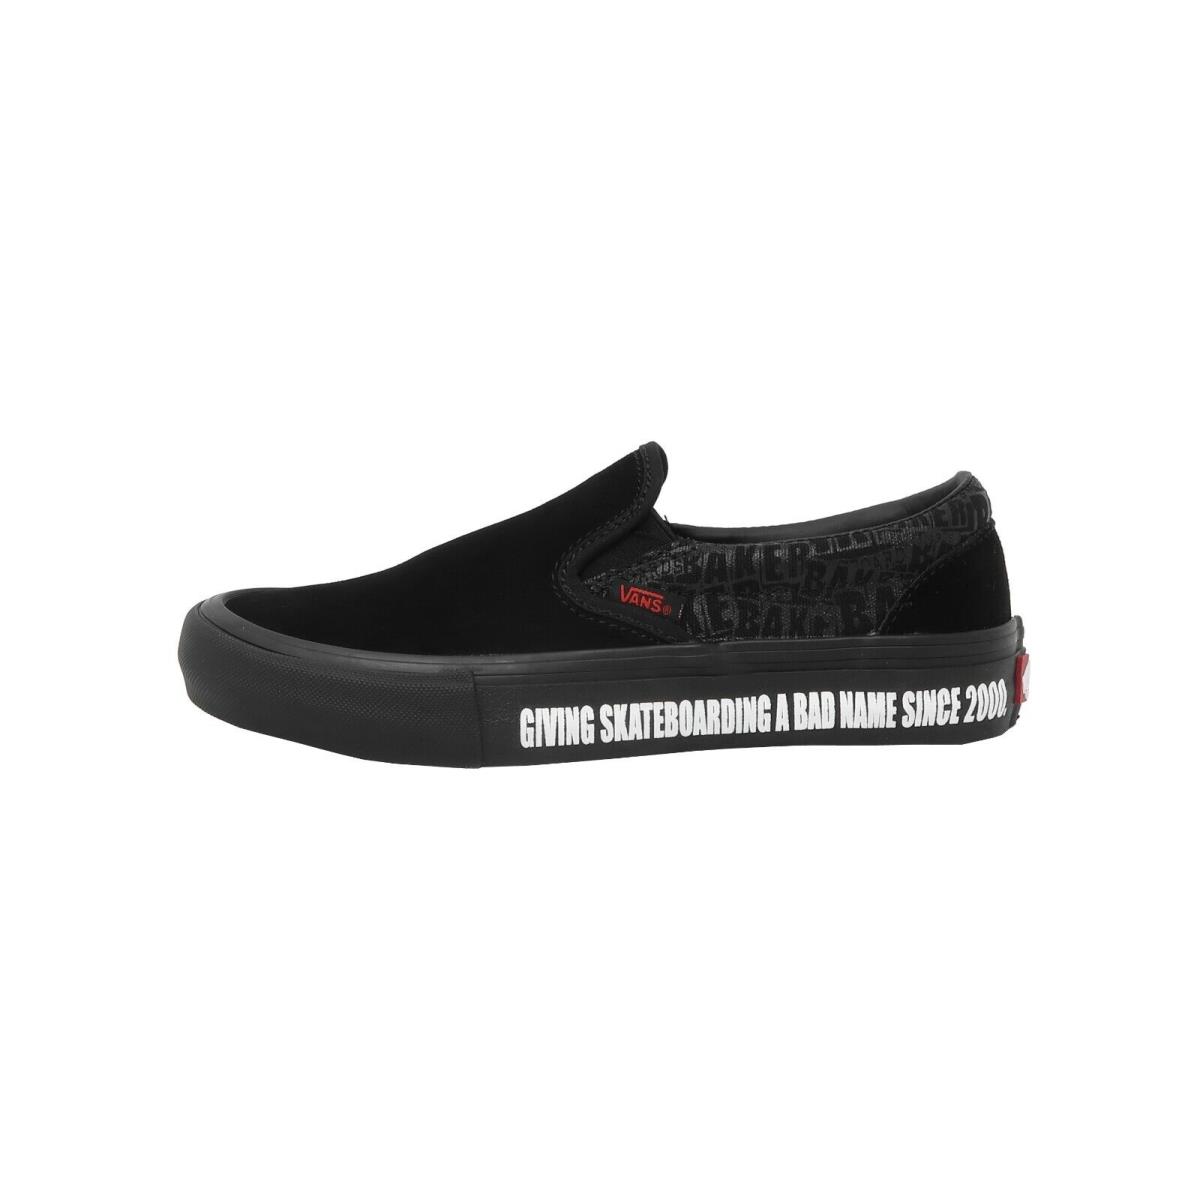 Vans Slip On Pro Suede Black Red Shoes Men Women Sneakers